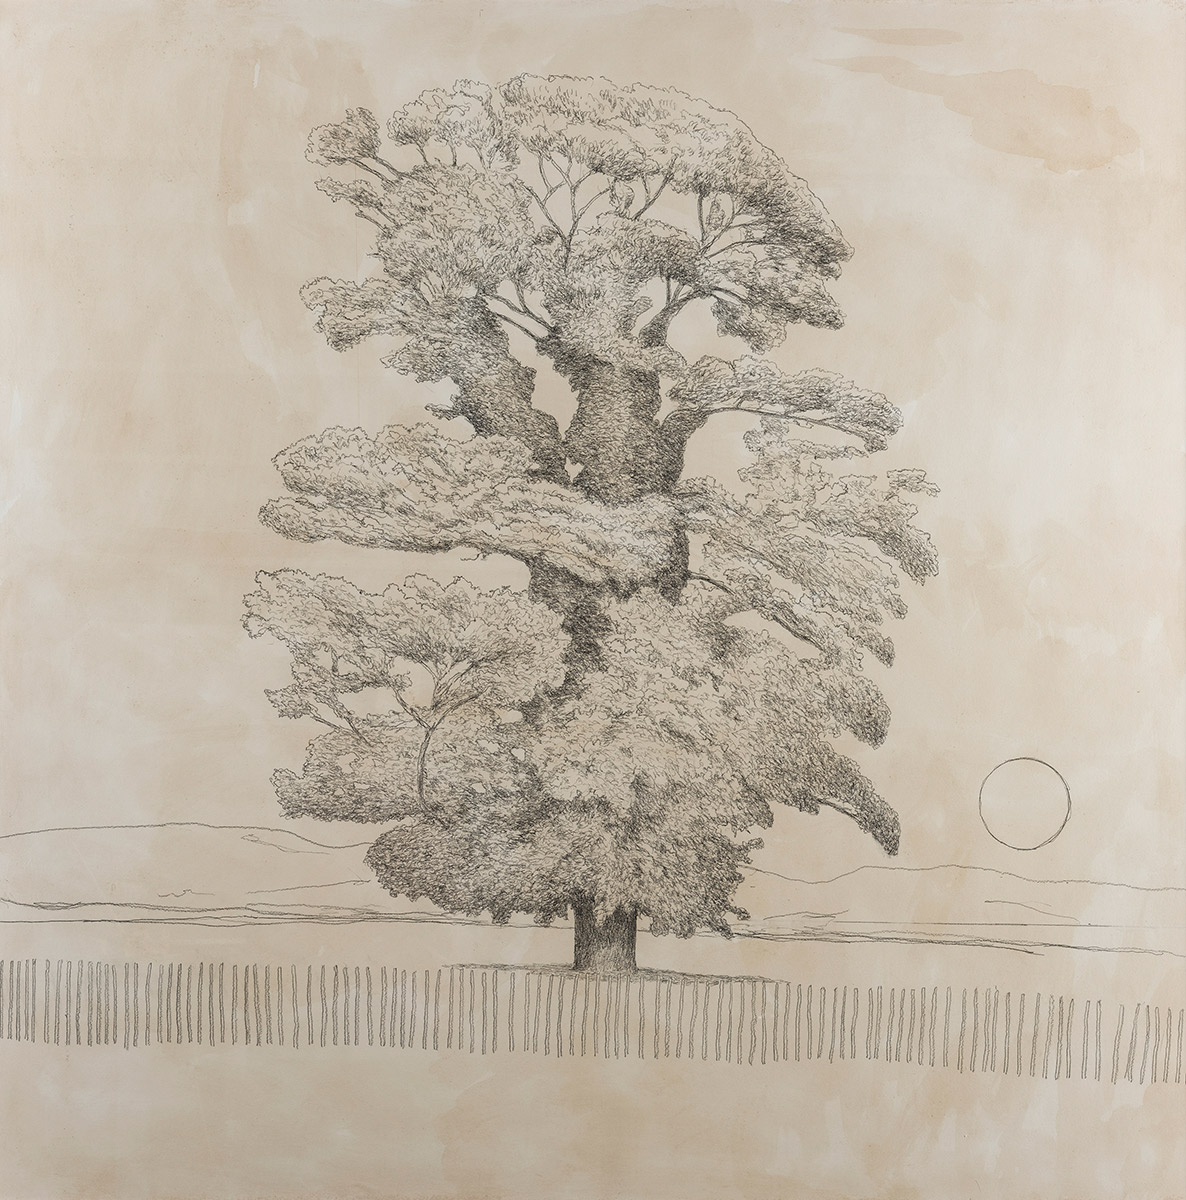 David-Inshaw-Sycamore-Tree-2019-encil-on-paper-122cm-square